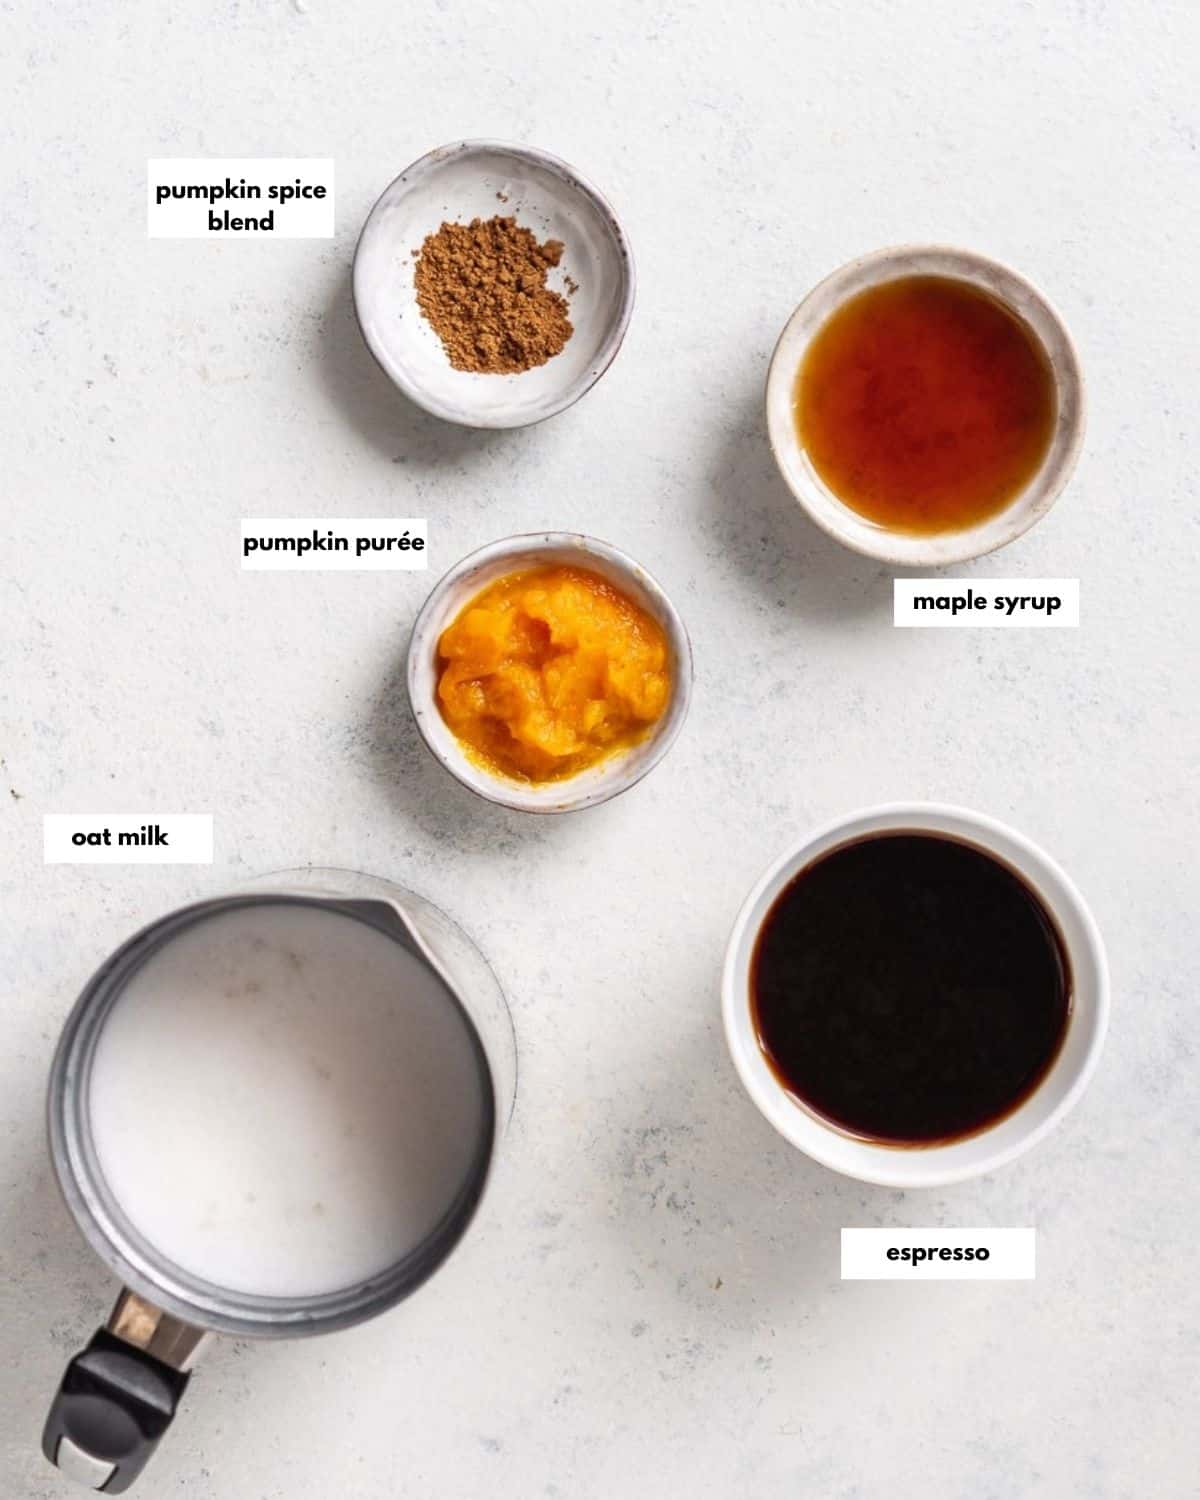 all ingredients needed to make pumpkin spice latte with oat milk: espresso, oat milk, pumpin puree, maple syrup, pumpkin spice blend